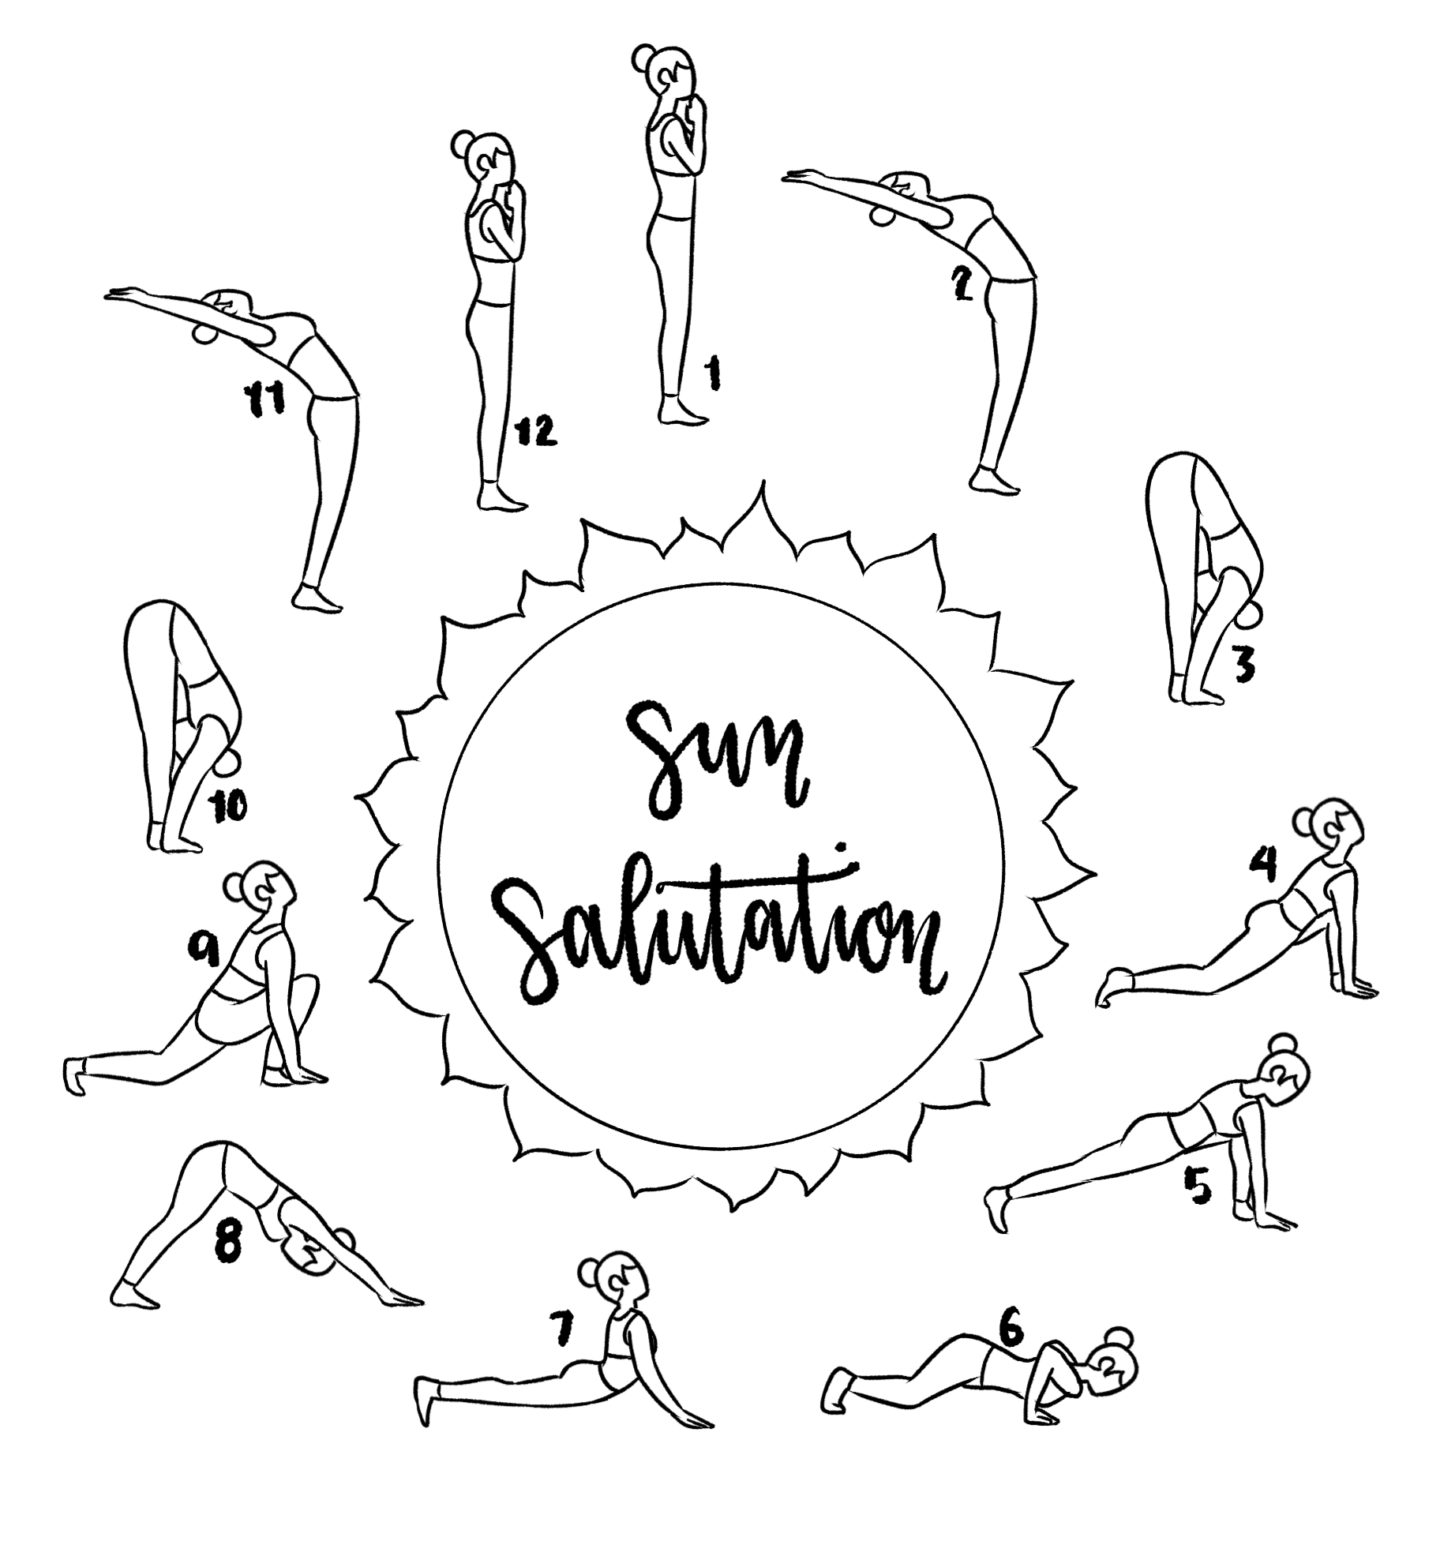 Sun salutation yoga stretch